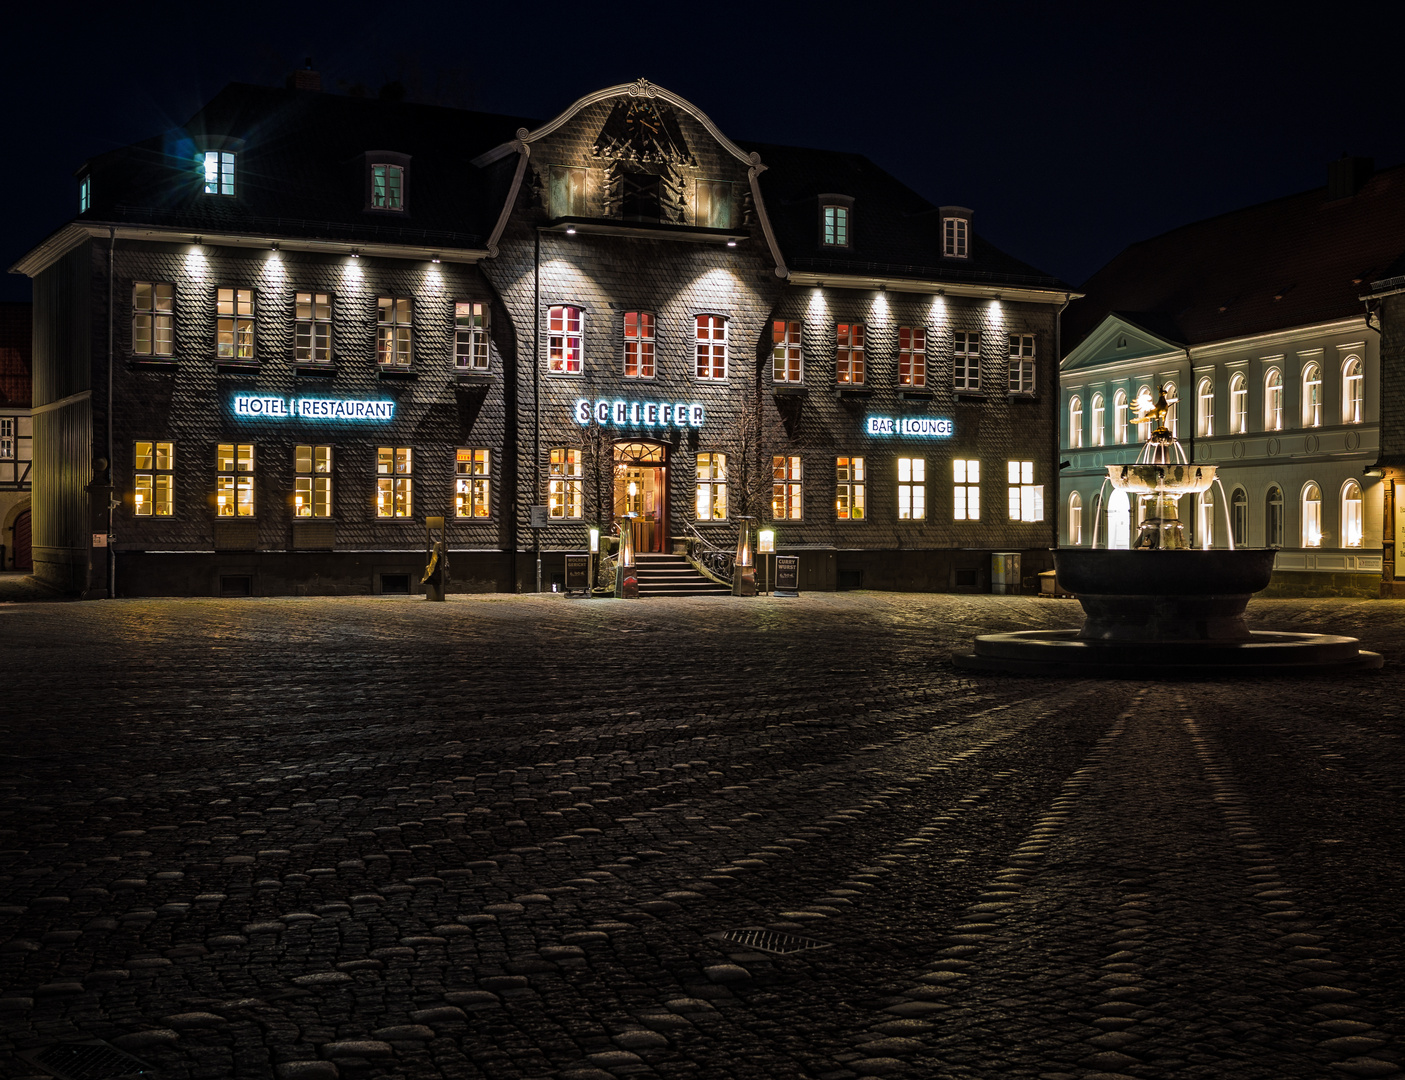 Marktplatz Goslar